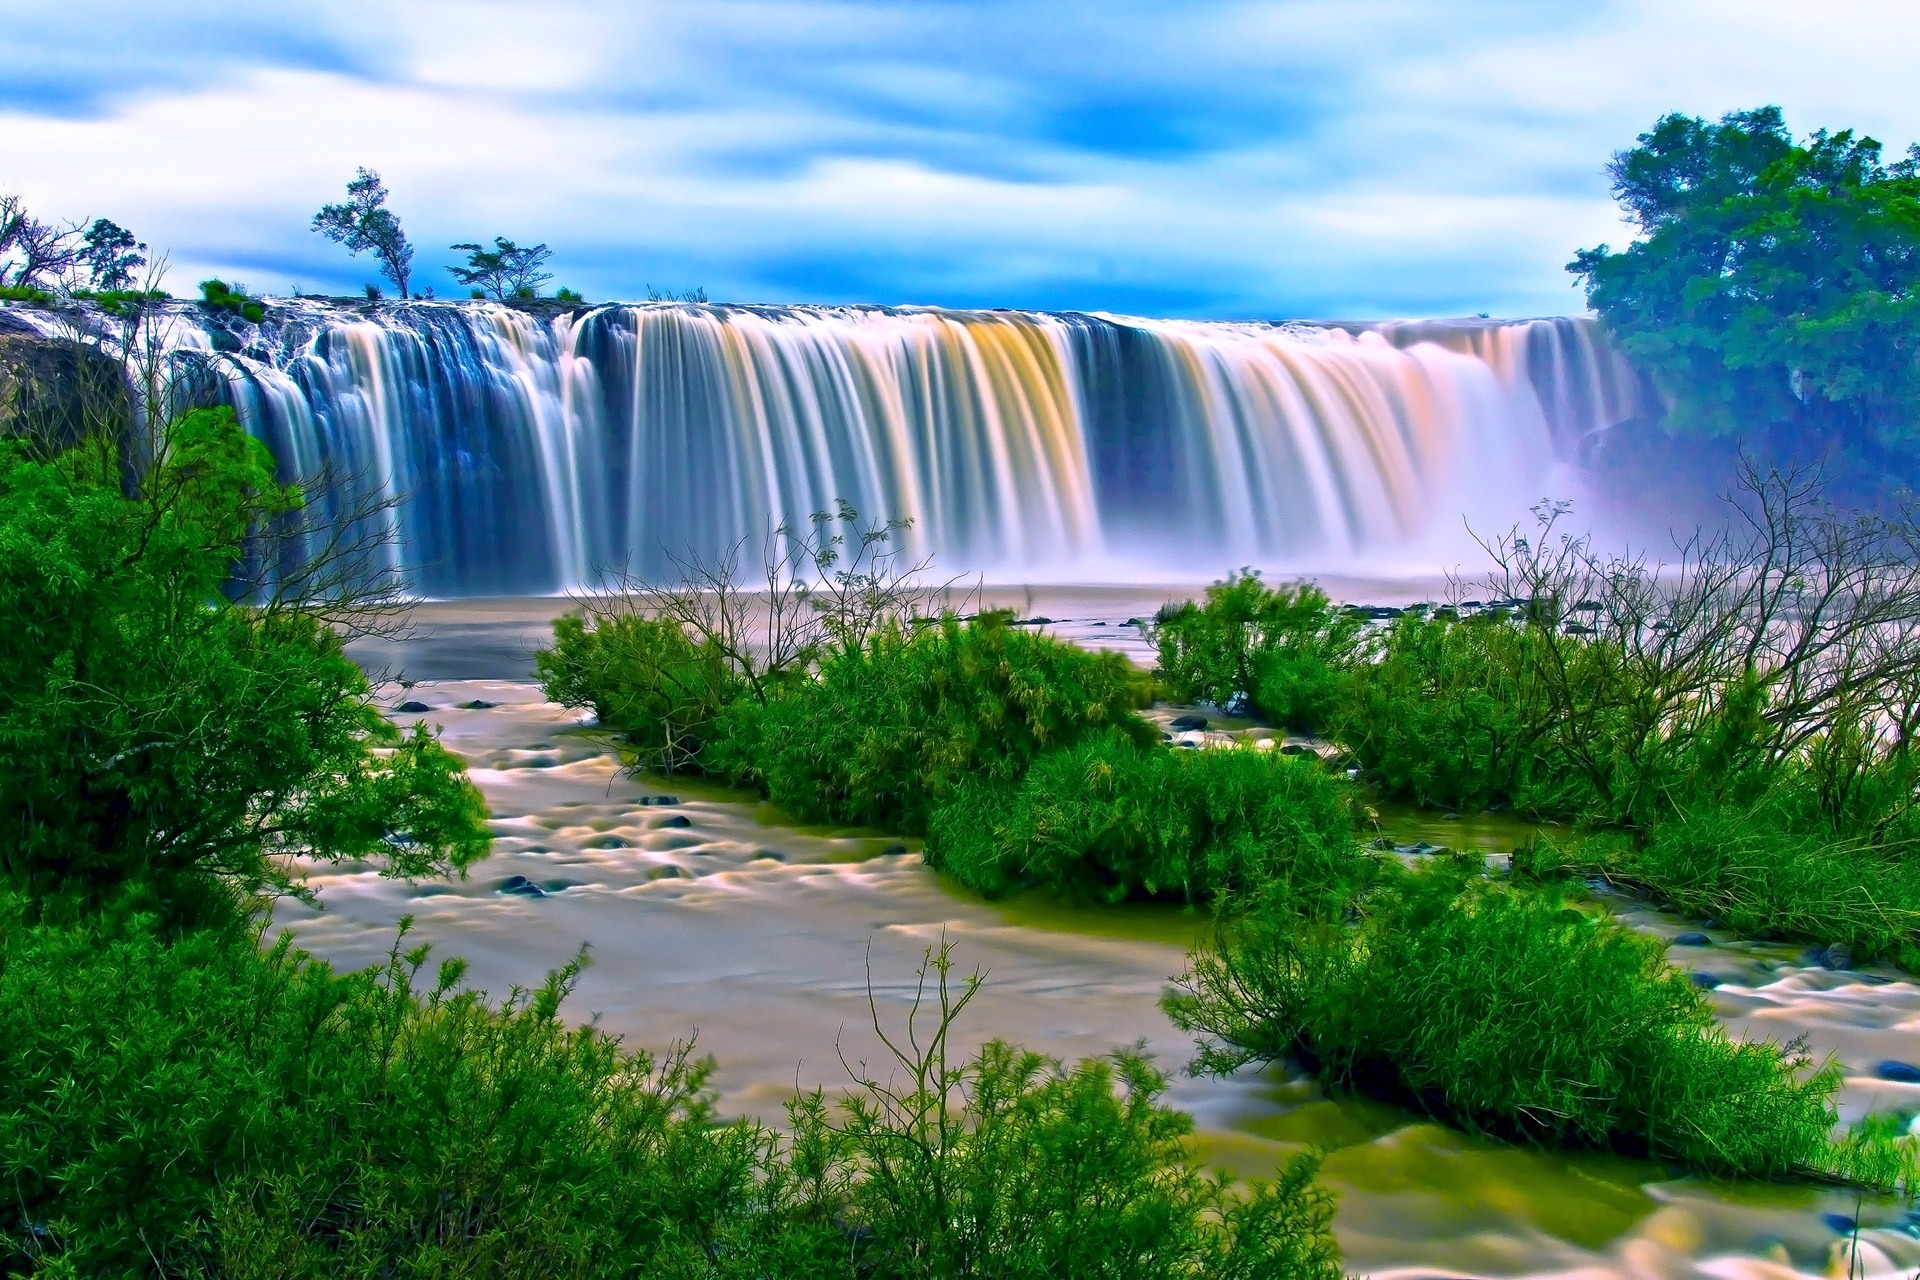 Amazing waterfall image